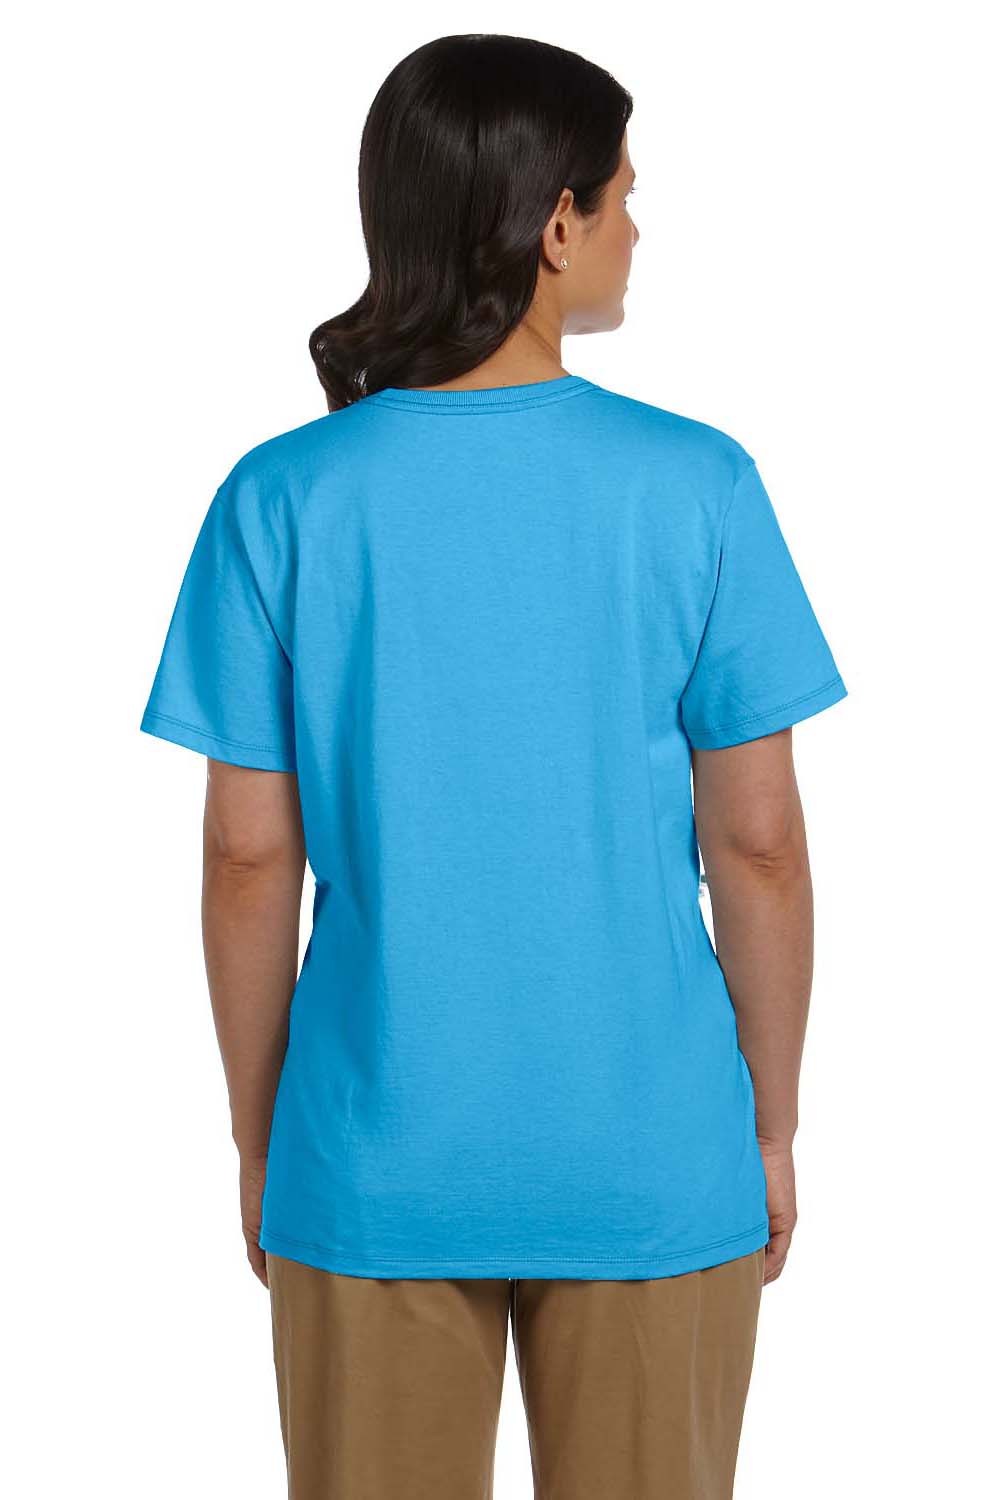 Hanes 5780 Womens ComfortSoft Short Sleeve V-Neck T-Shirt Aquatic Blue Back